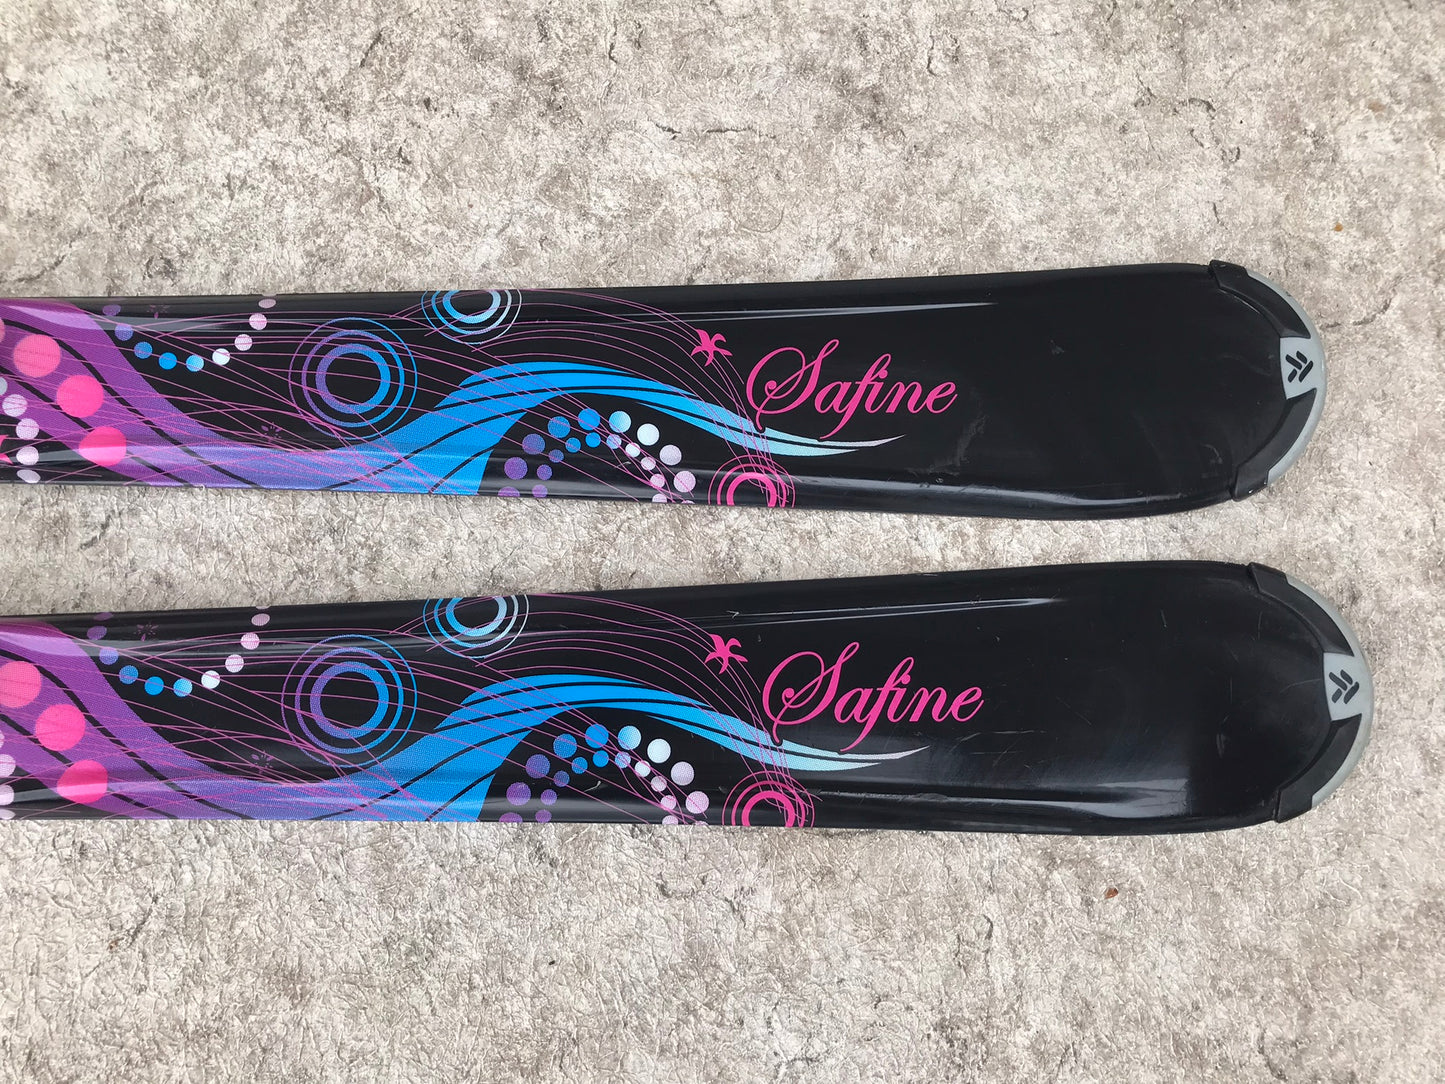 Ski 144 Techno Pro Safine Parabolic Black Pink With Bindings